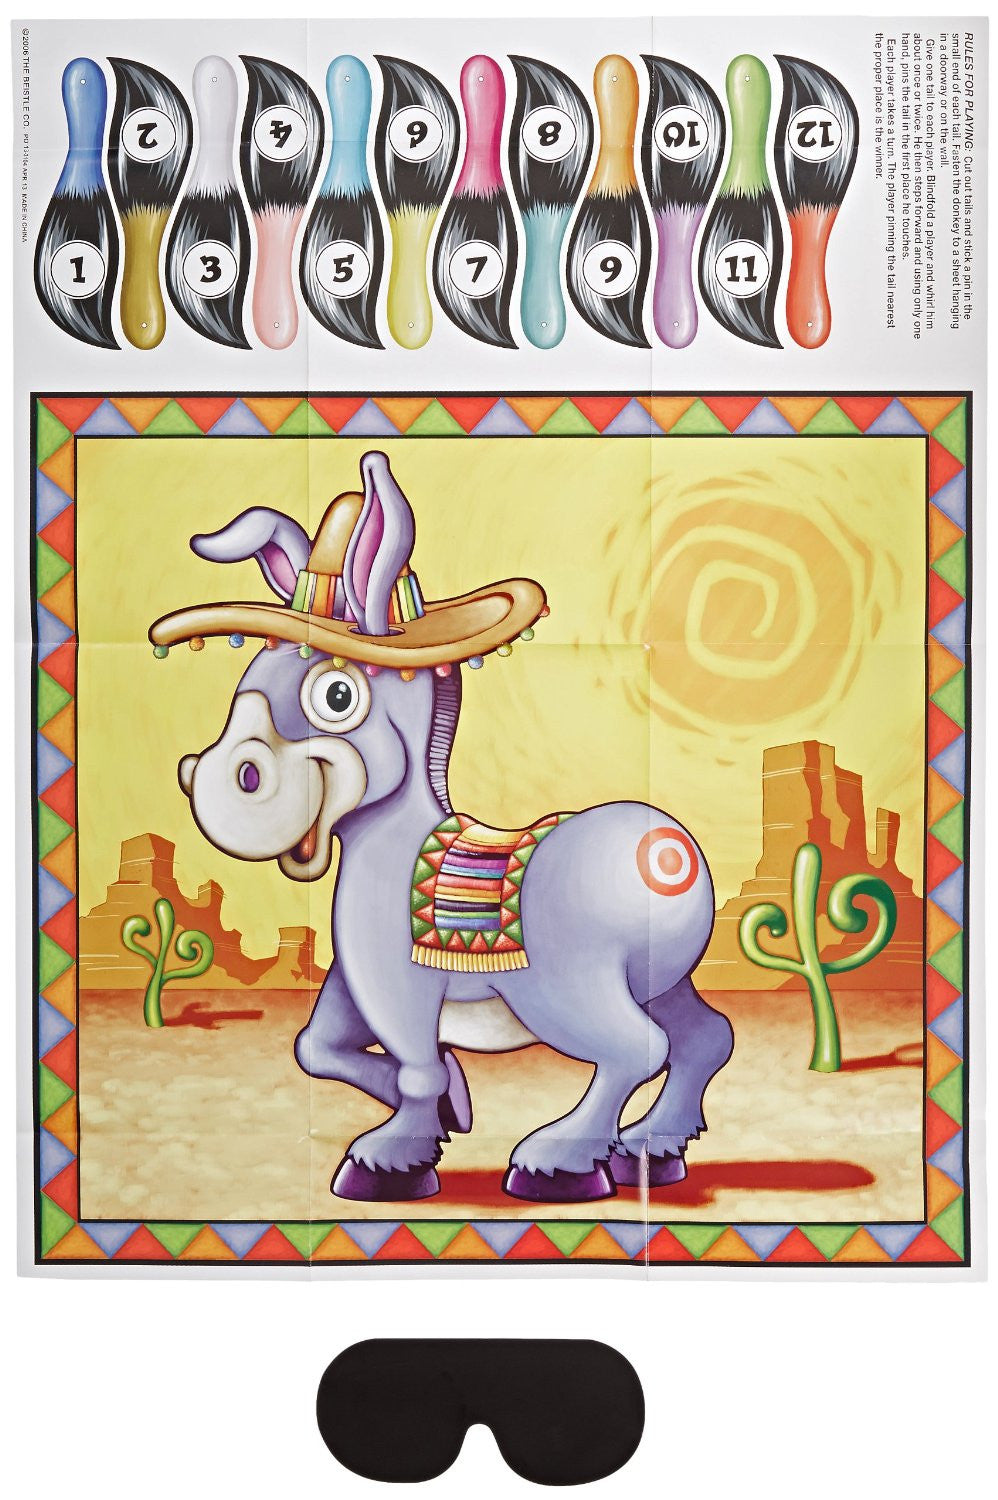 Donkey Game